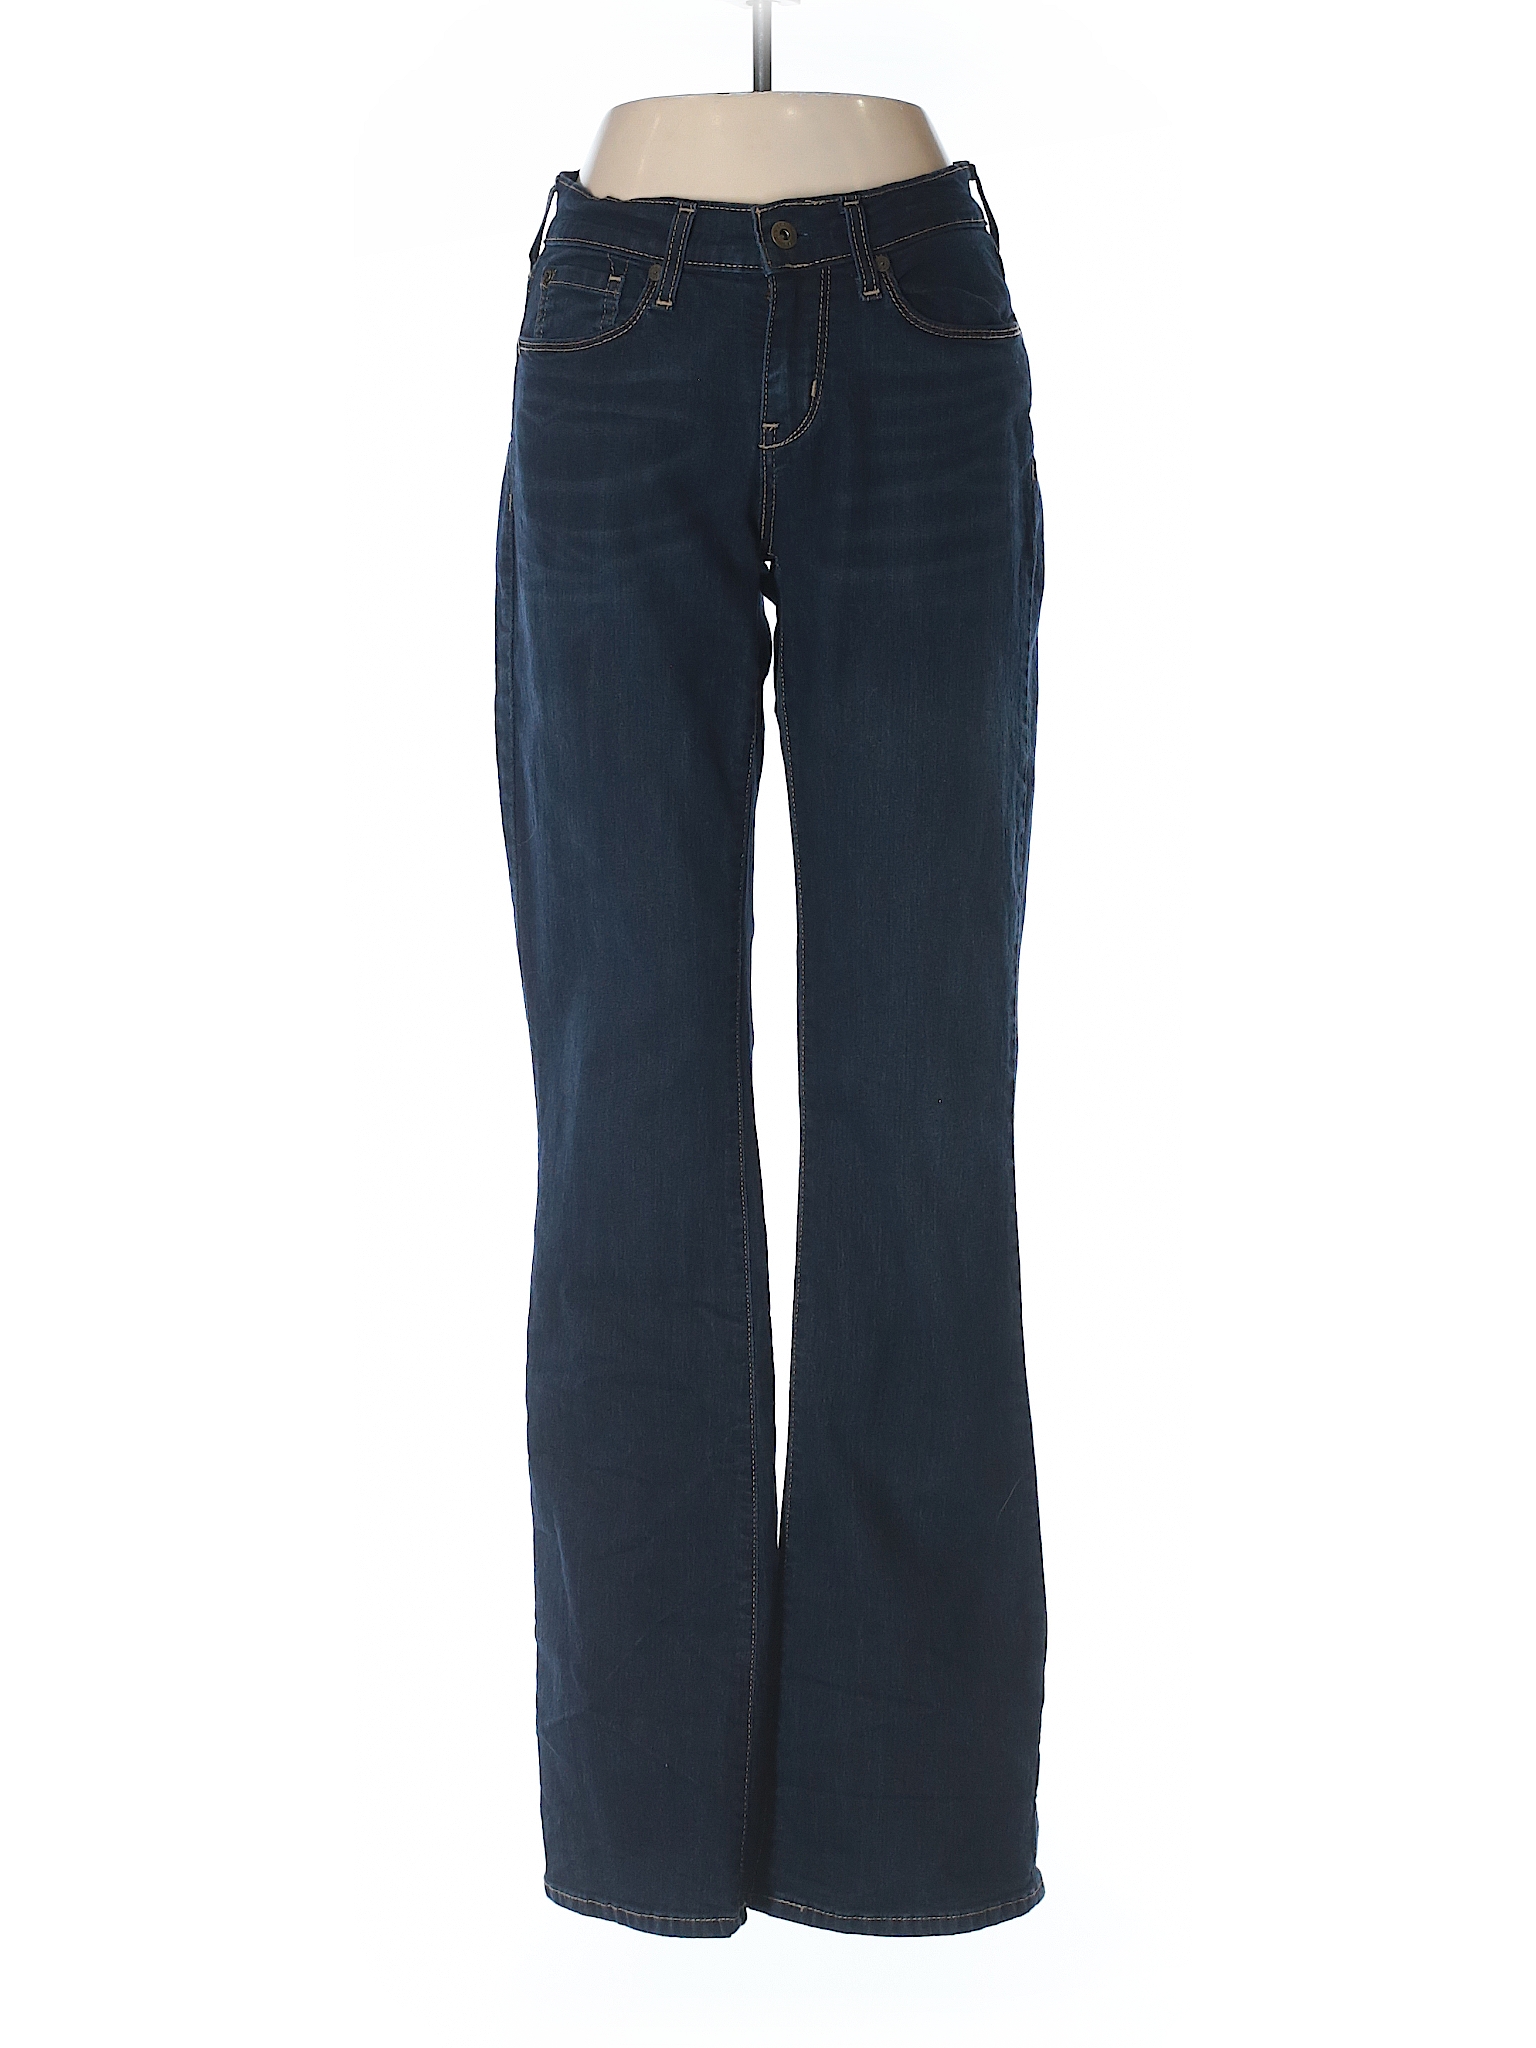 Denizen from Levi's Solid Dark Blue Jeans Size 8 (Tall) - 63% off | thredUP